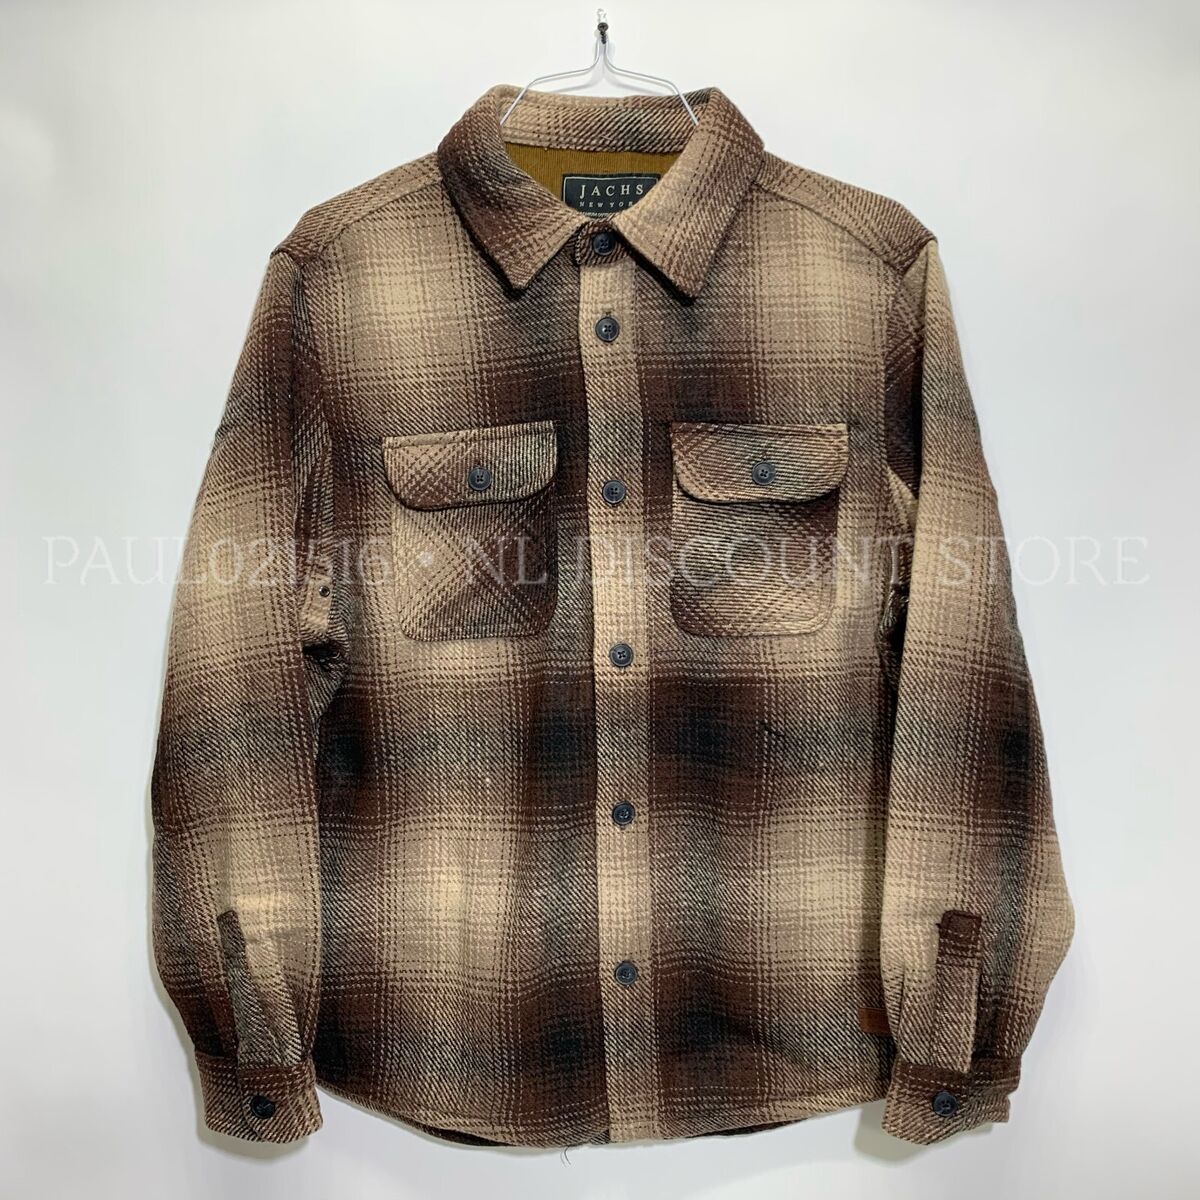 JACHS Men's Premium Shirt Wool Blend Jacket w Inside Pocket